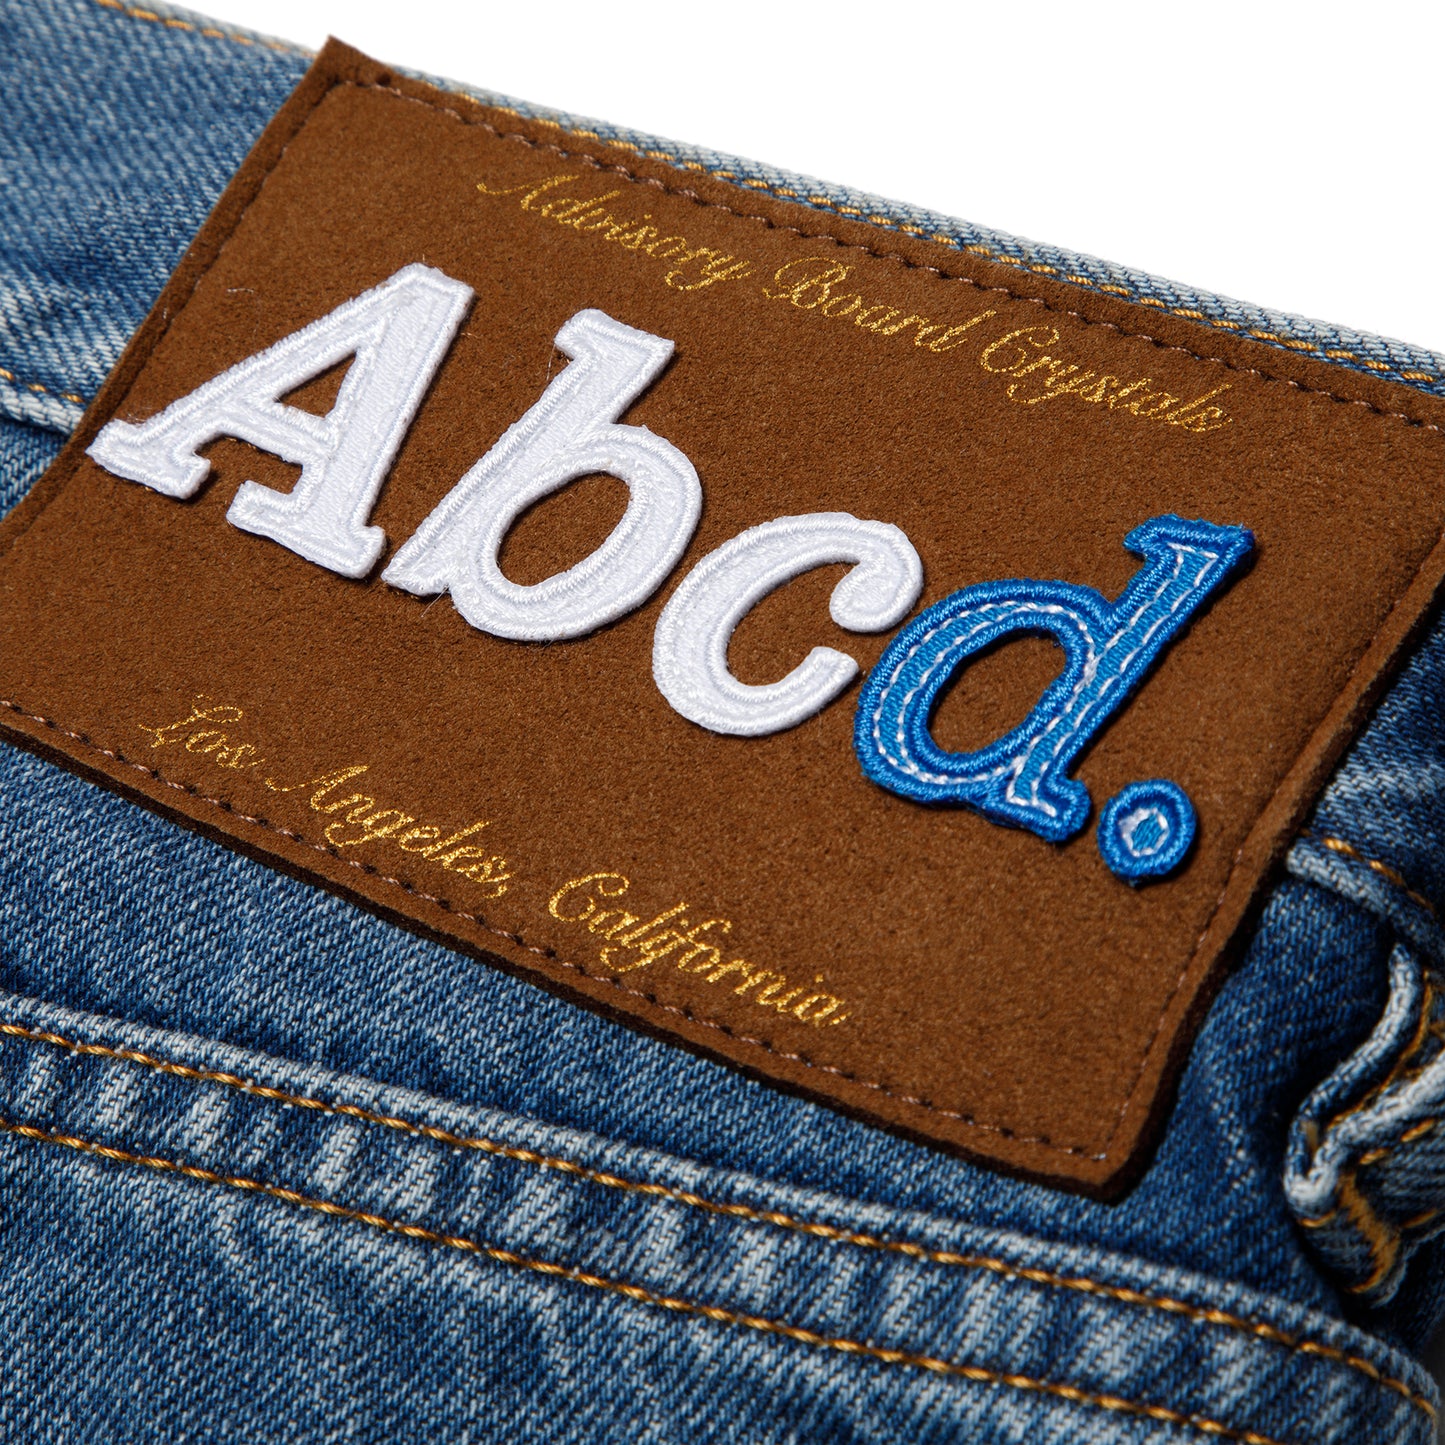 Advisory Board Crystals Abcd Original Fit Jean (vintage blue)